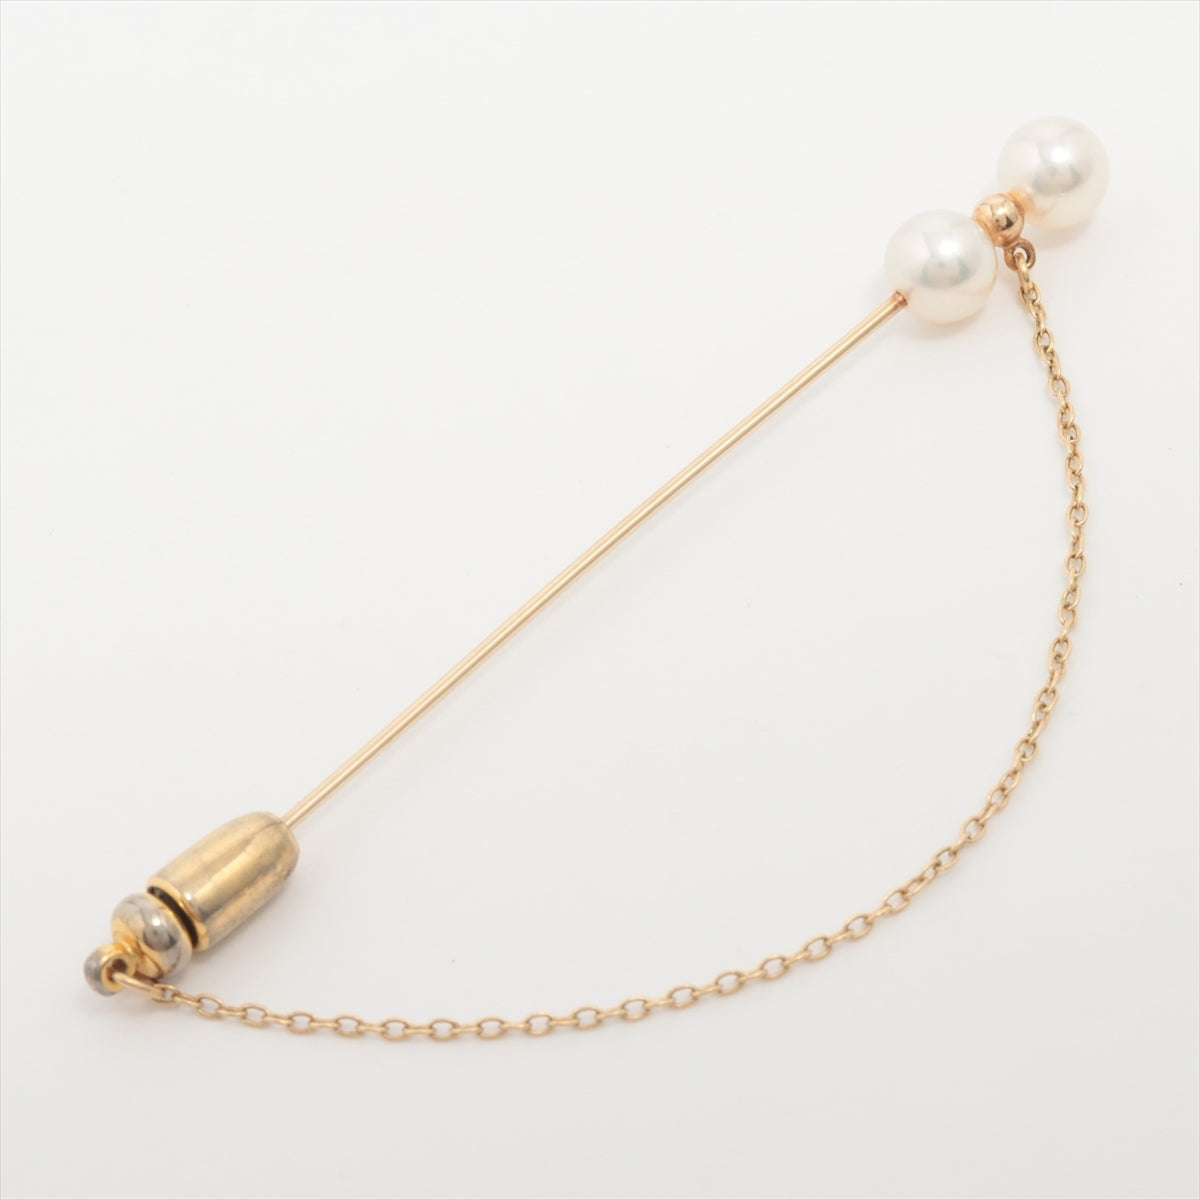 Mikimoto Pearl Pin brooch K14(YG) 3.1g total Approx. 6.5mm